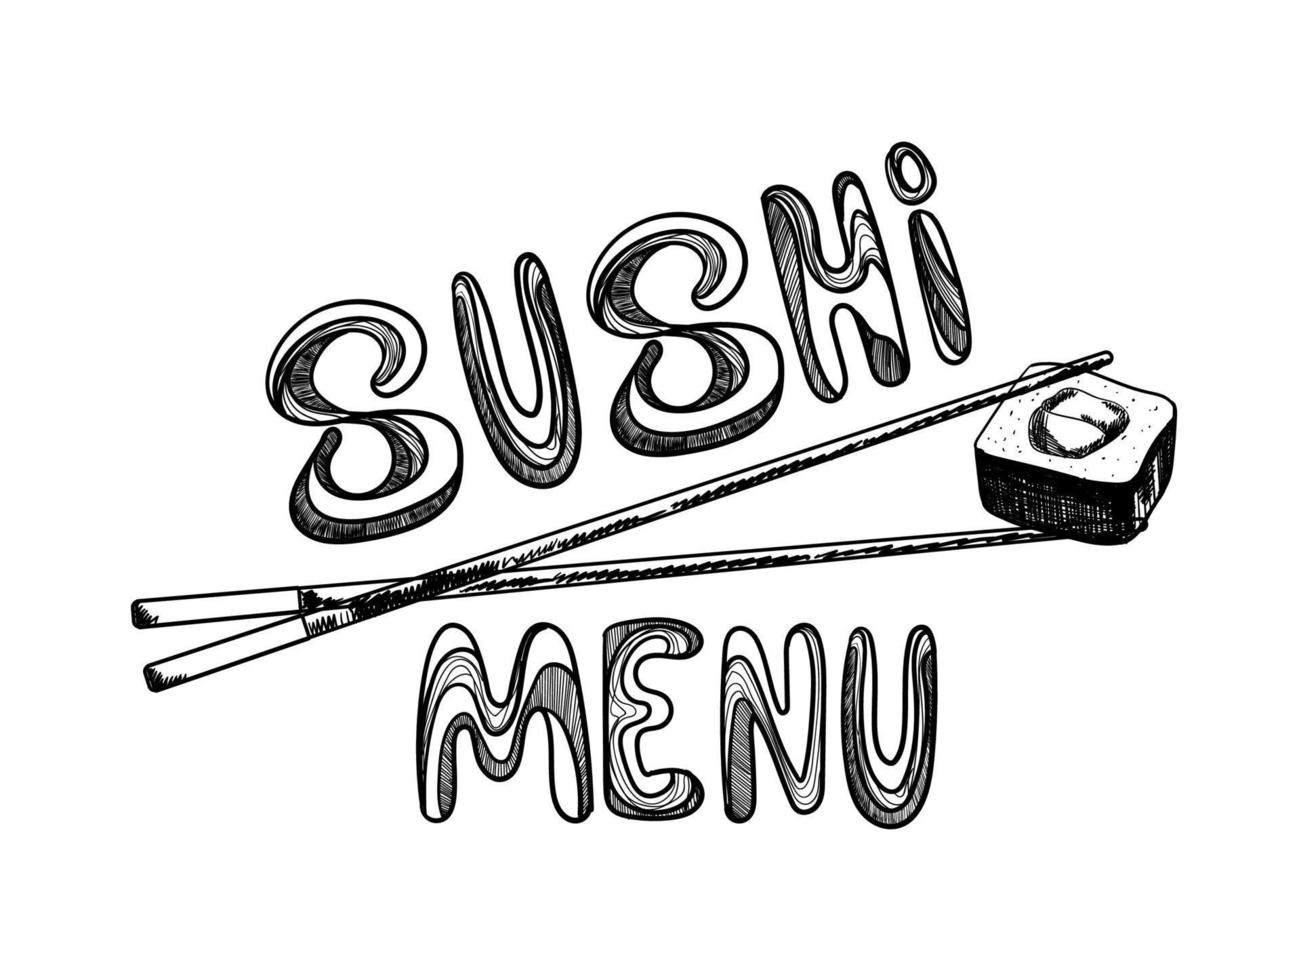 Japanese sushi logo for concept design. An element for menu design. Chopsticks holding sushi roll. Asian food. Black and white graphics. Vector illustration.